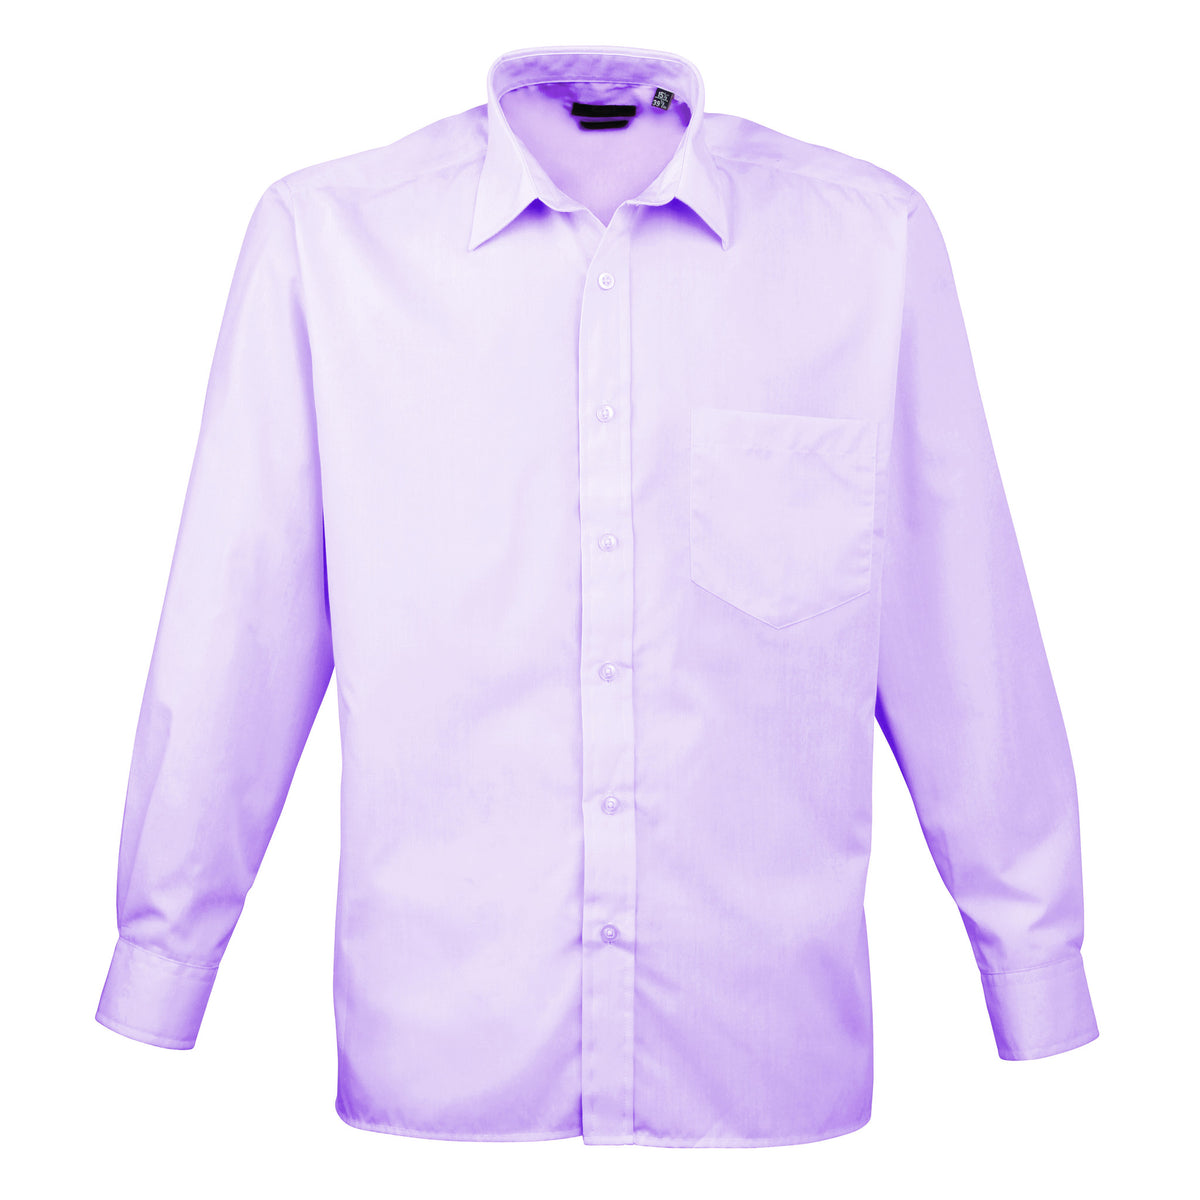 Premier Poplin Shirts (Navy, Lilac, Purple, Violet, Aubergine) - peterdrew.com
 - 7